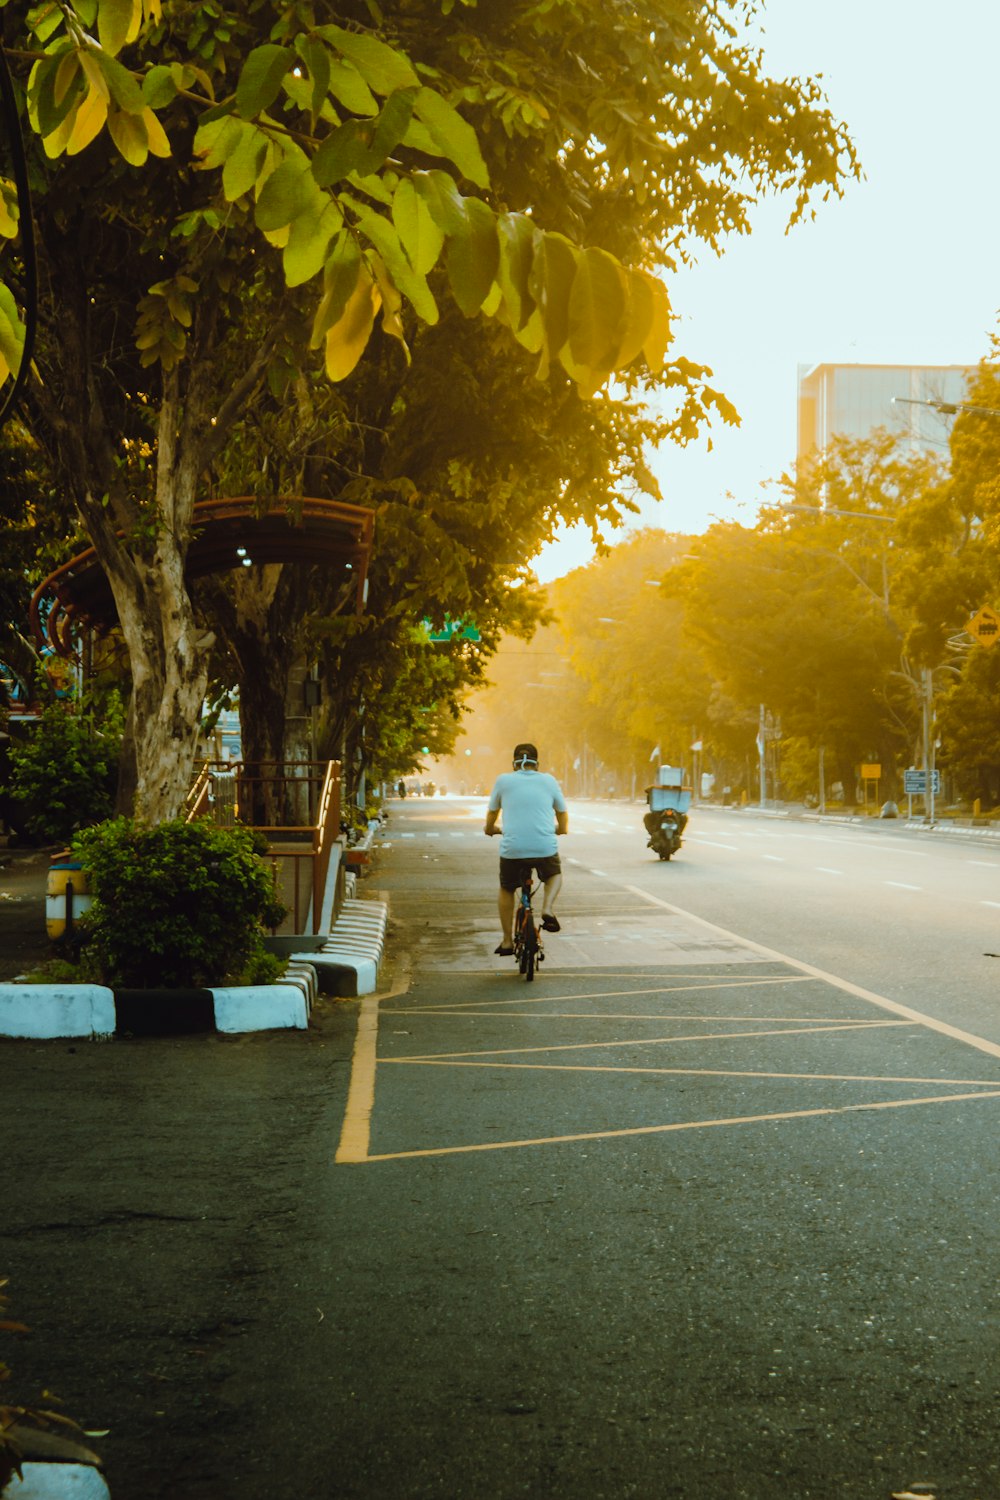 man in white shirt riding bicycle on road during daytime